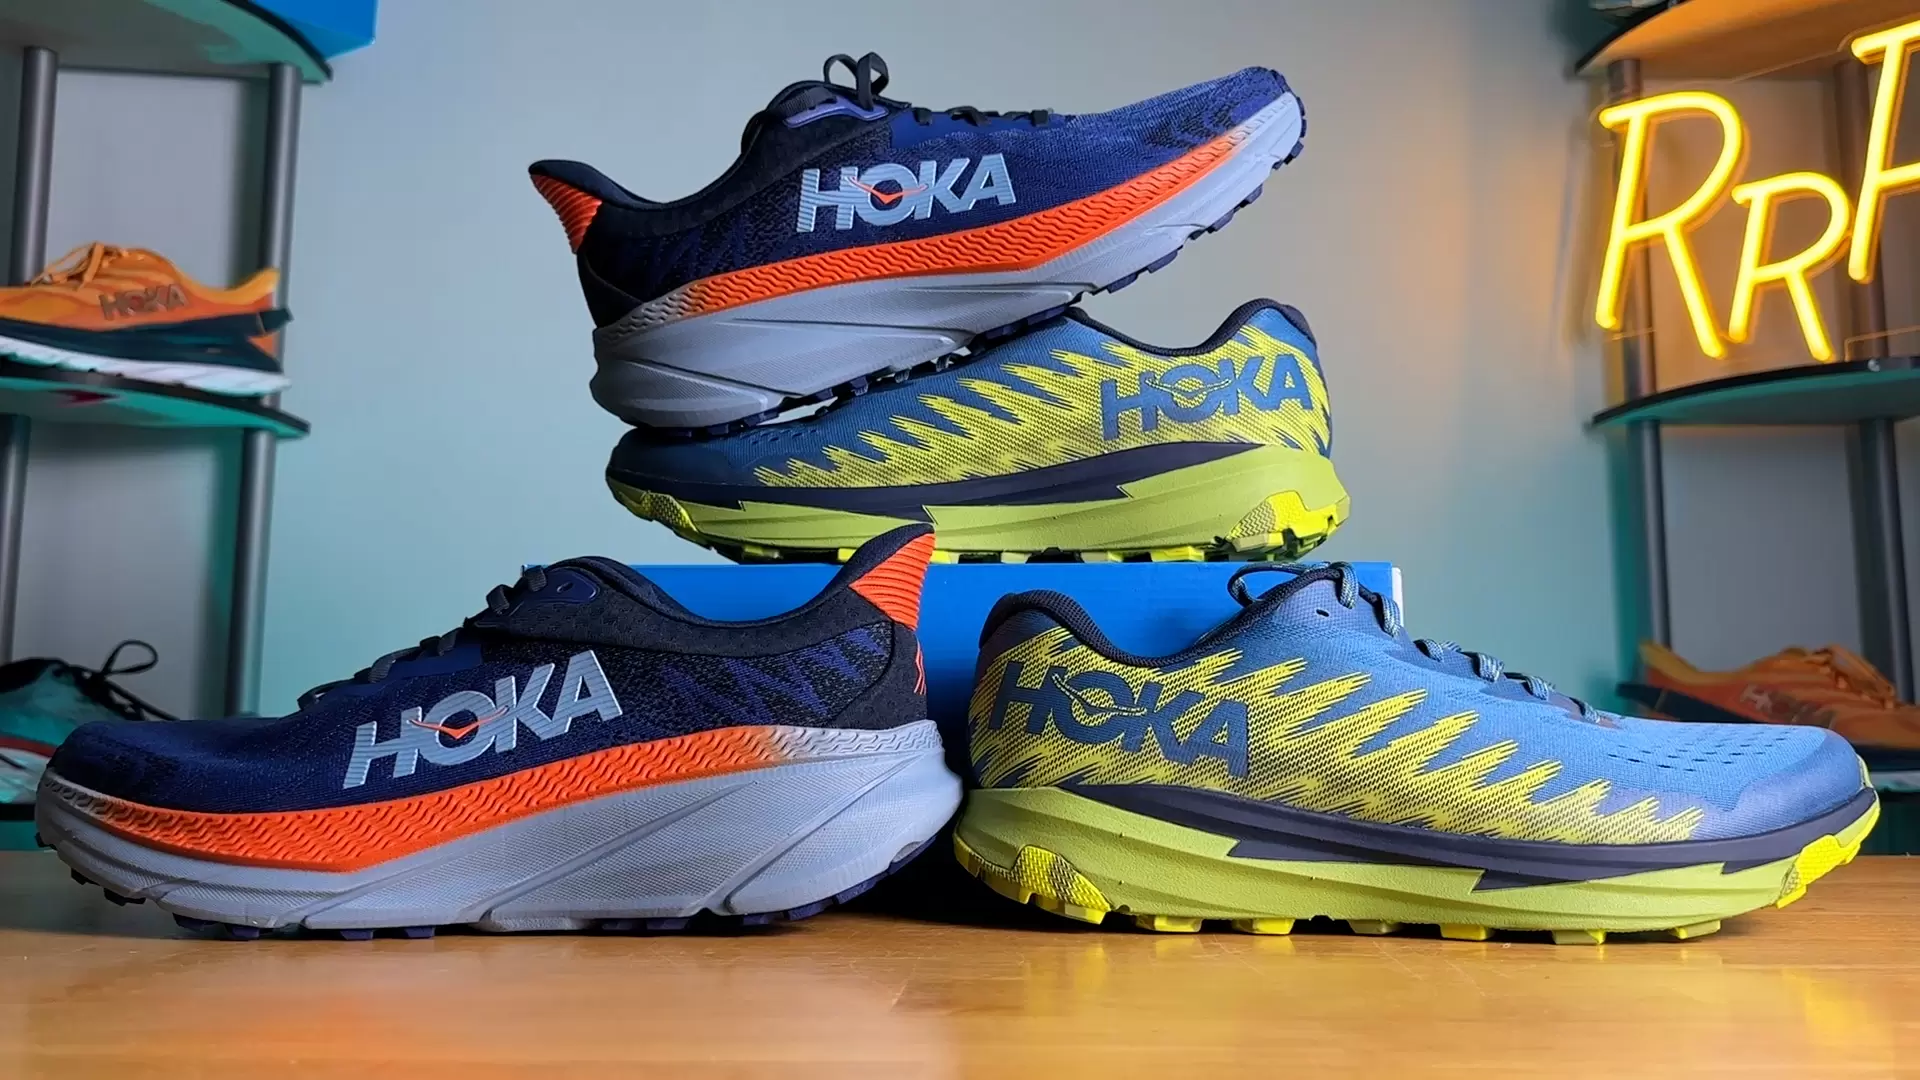 On Running shoes vs. Hoka One One